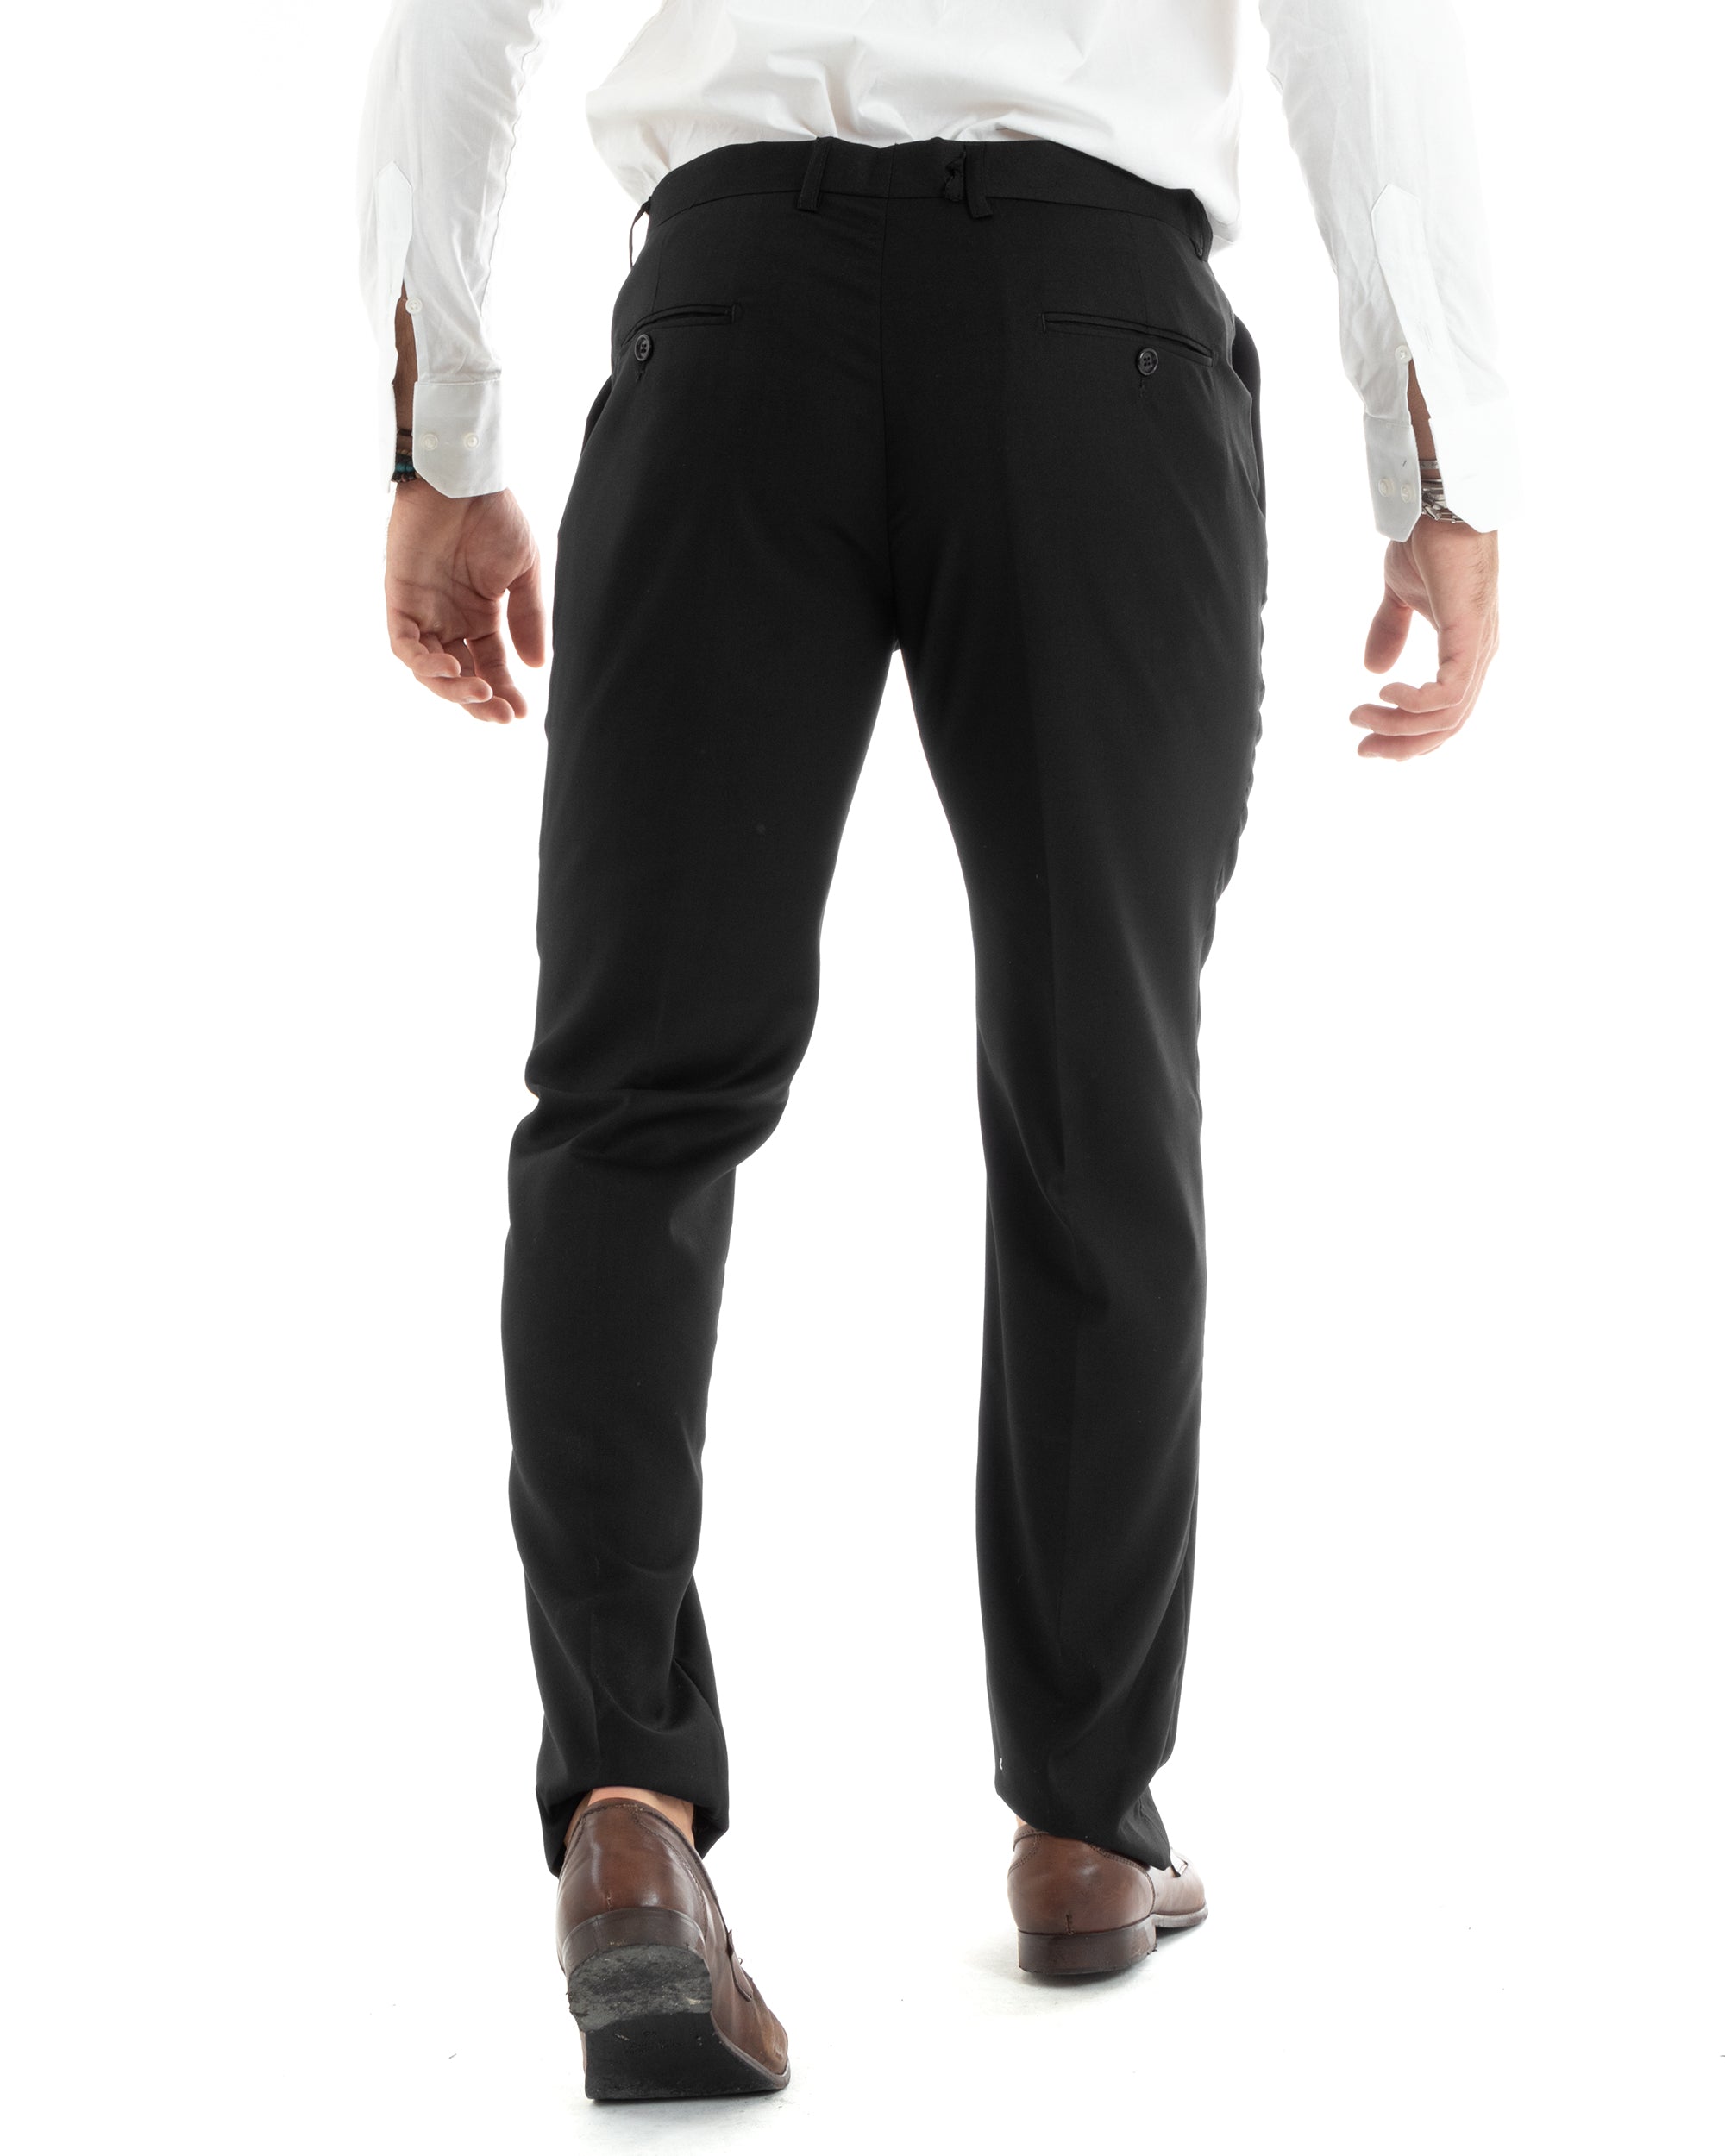 Abito Uomo Monopetto Vestito Smoking Rever Raso Completo Giacca Pantaloni Nero Elegante GIOSAL-OU2426A